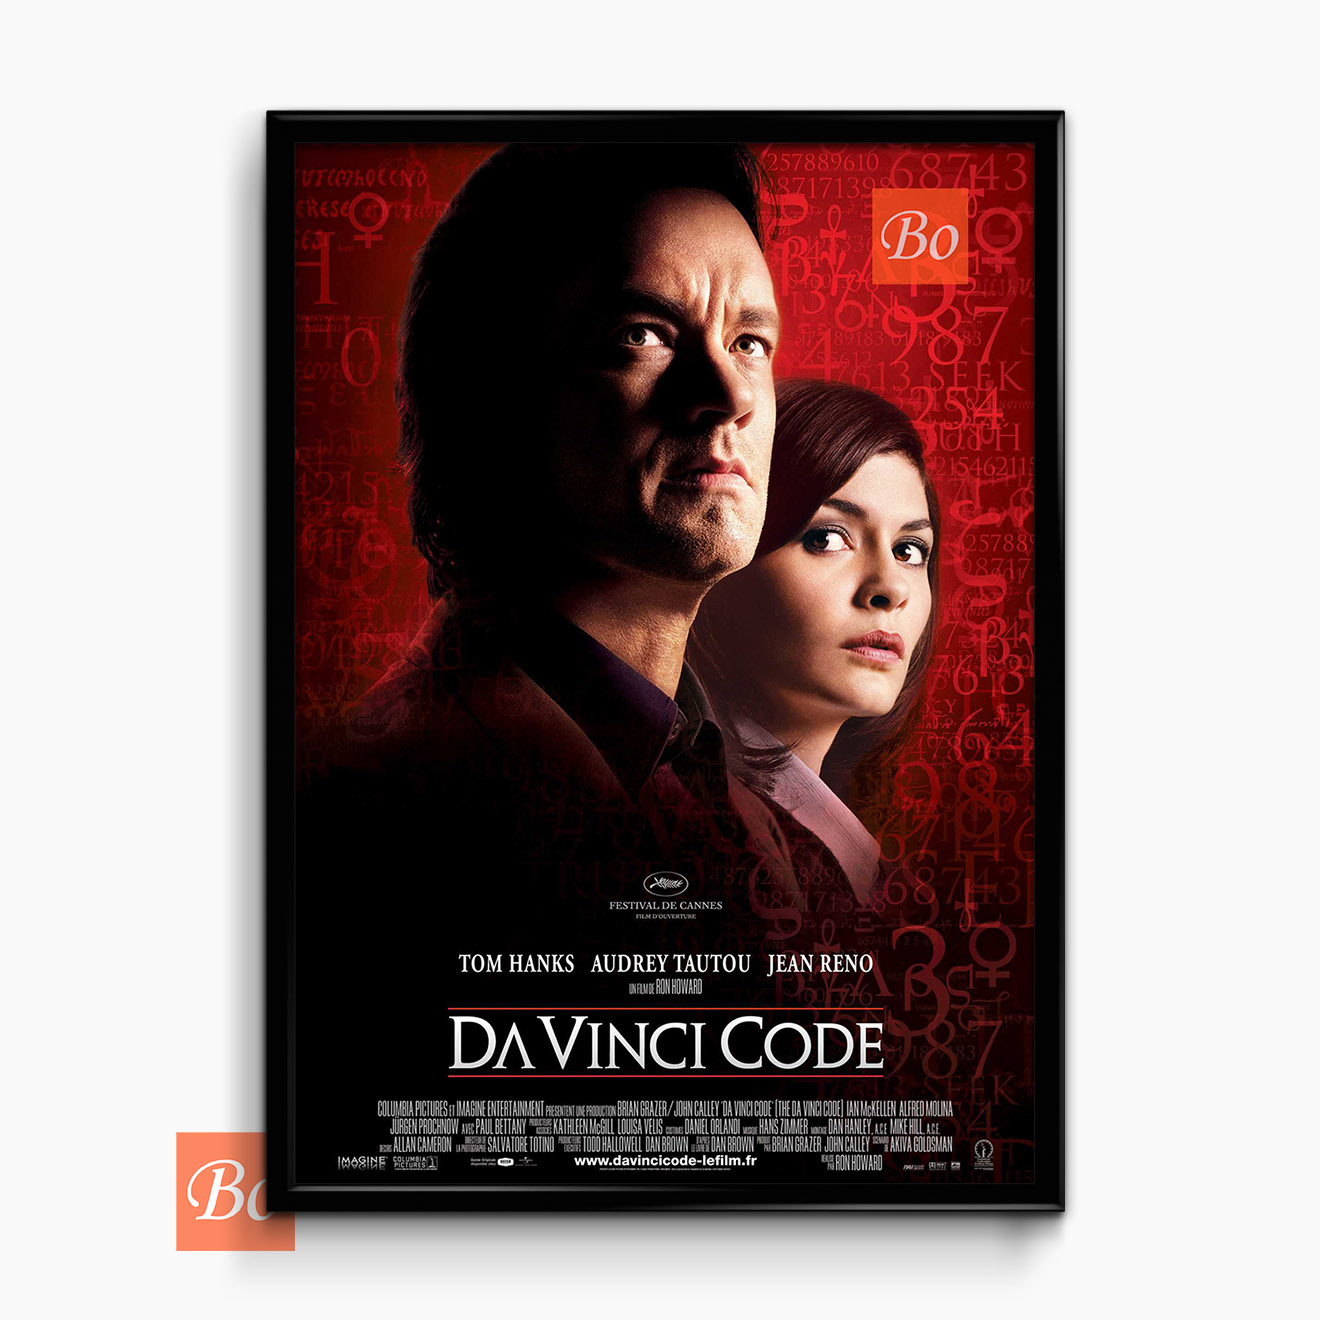 达·芬奇密码 The Da Vinci Code 电影 (2006)